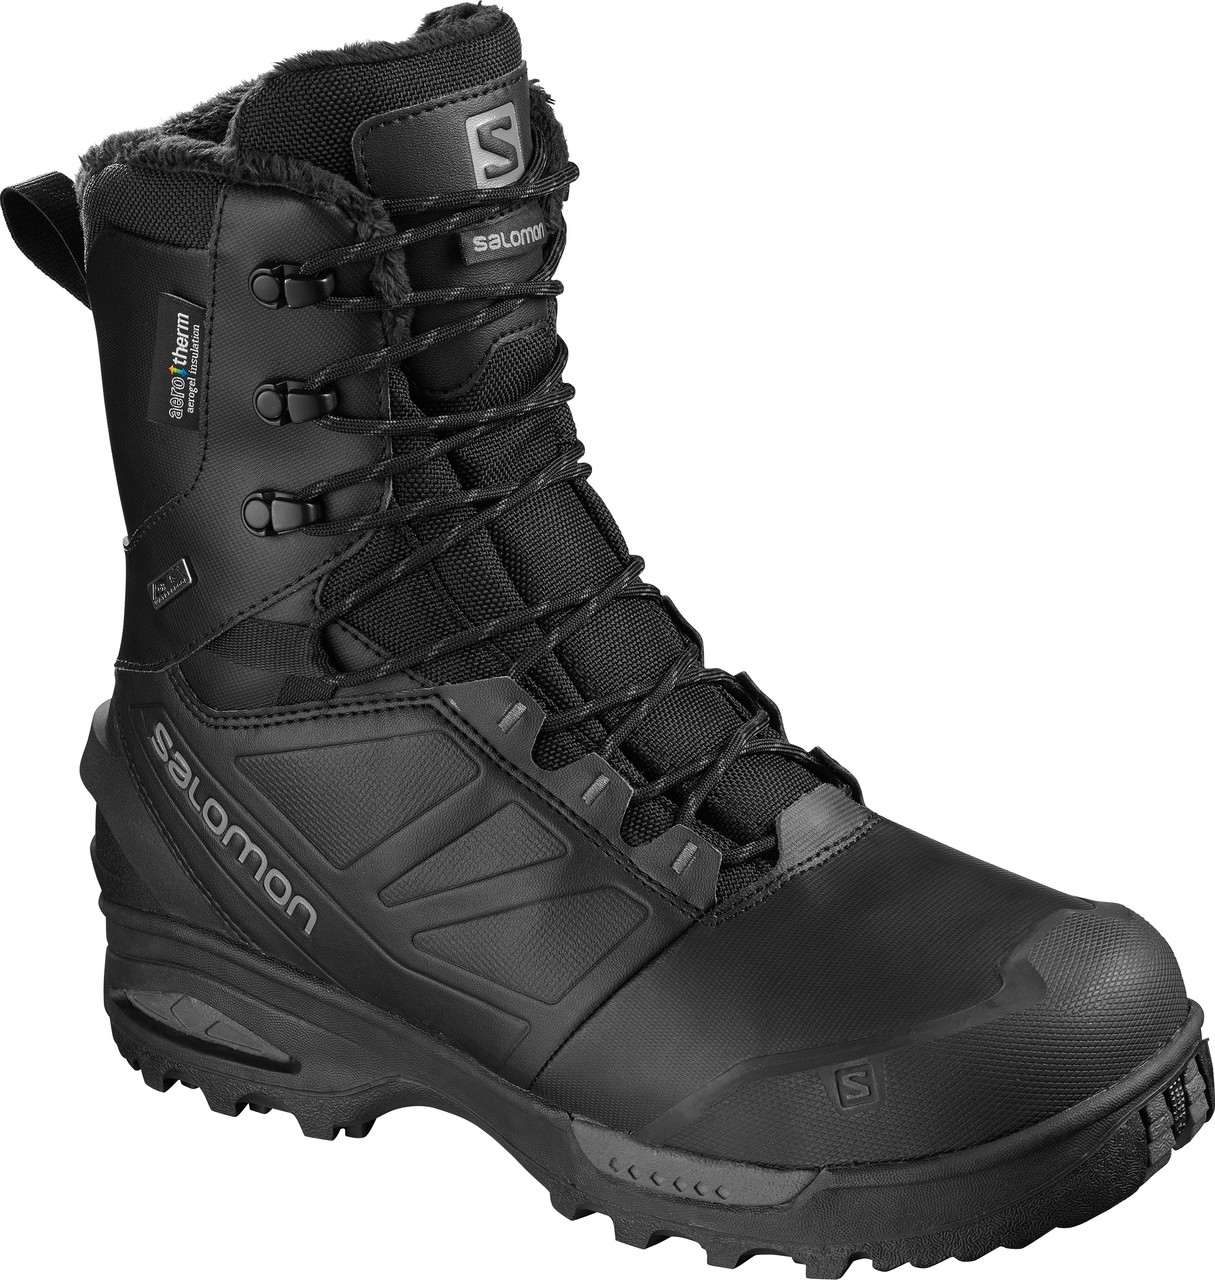 Toundra Pro CS Waterproof Winter Boots Black/Black/Magnet